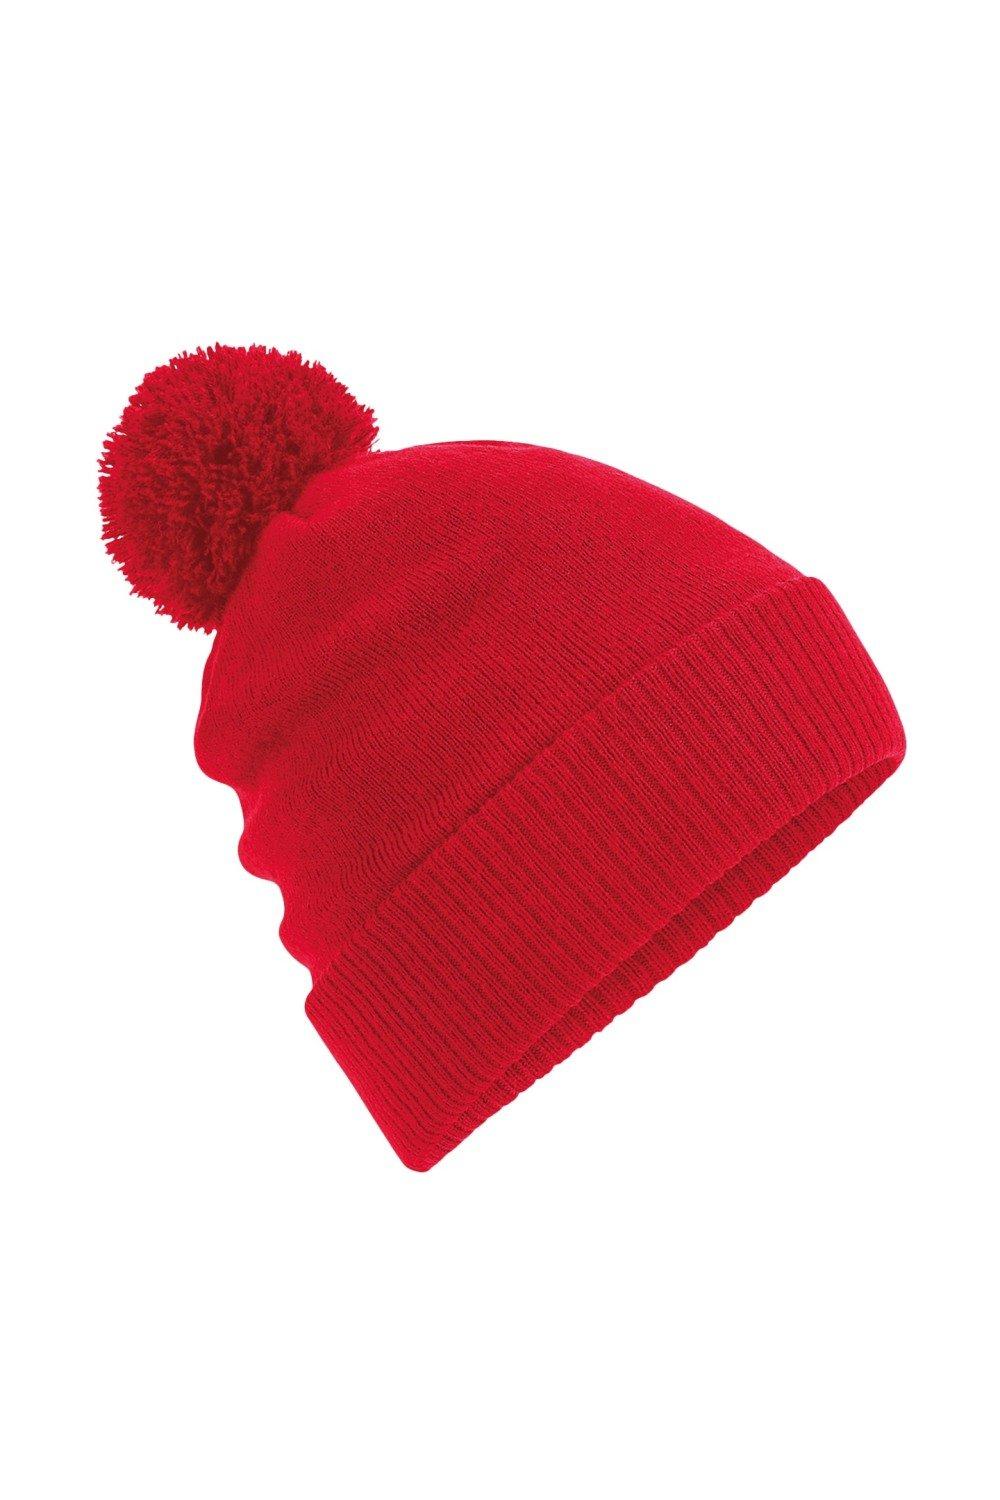 Шапка «Снежная звезда» Beechfield, красный траулерная шапка beechfield красный